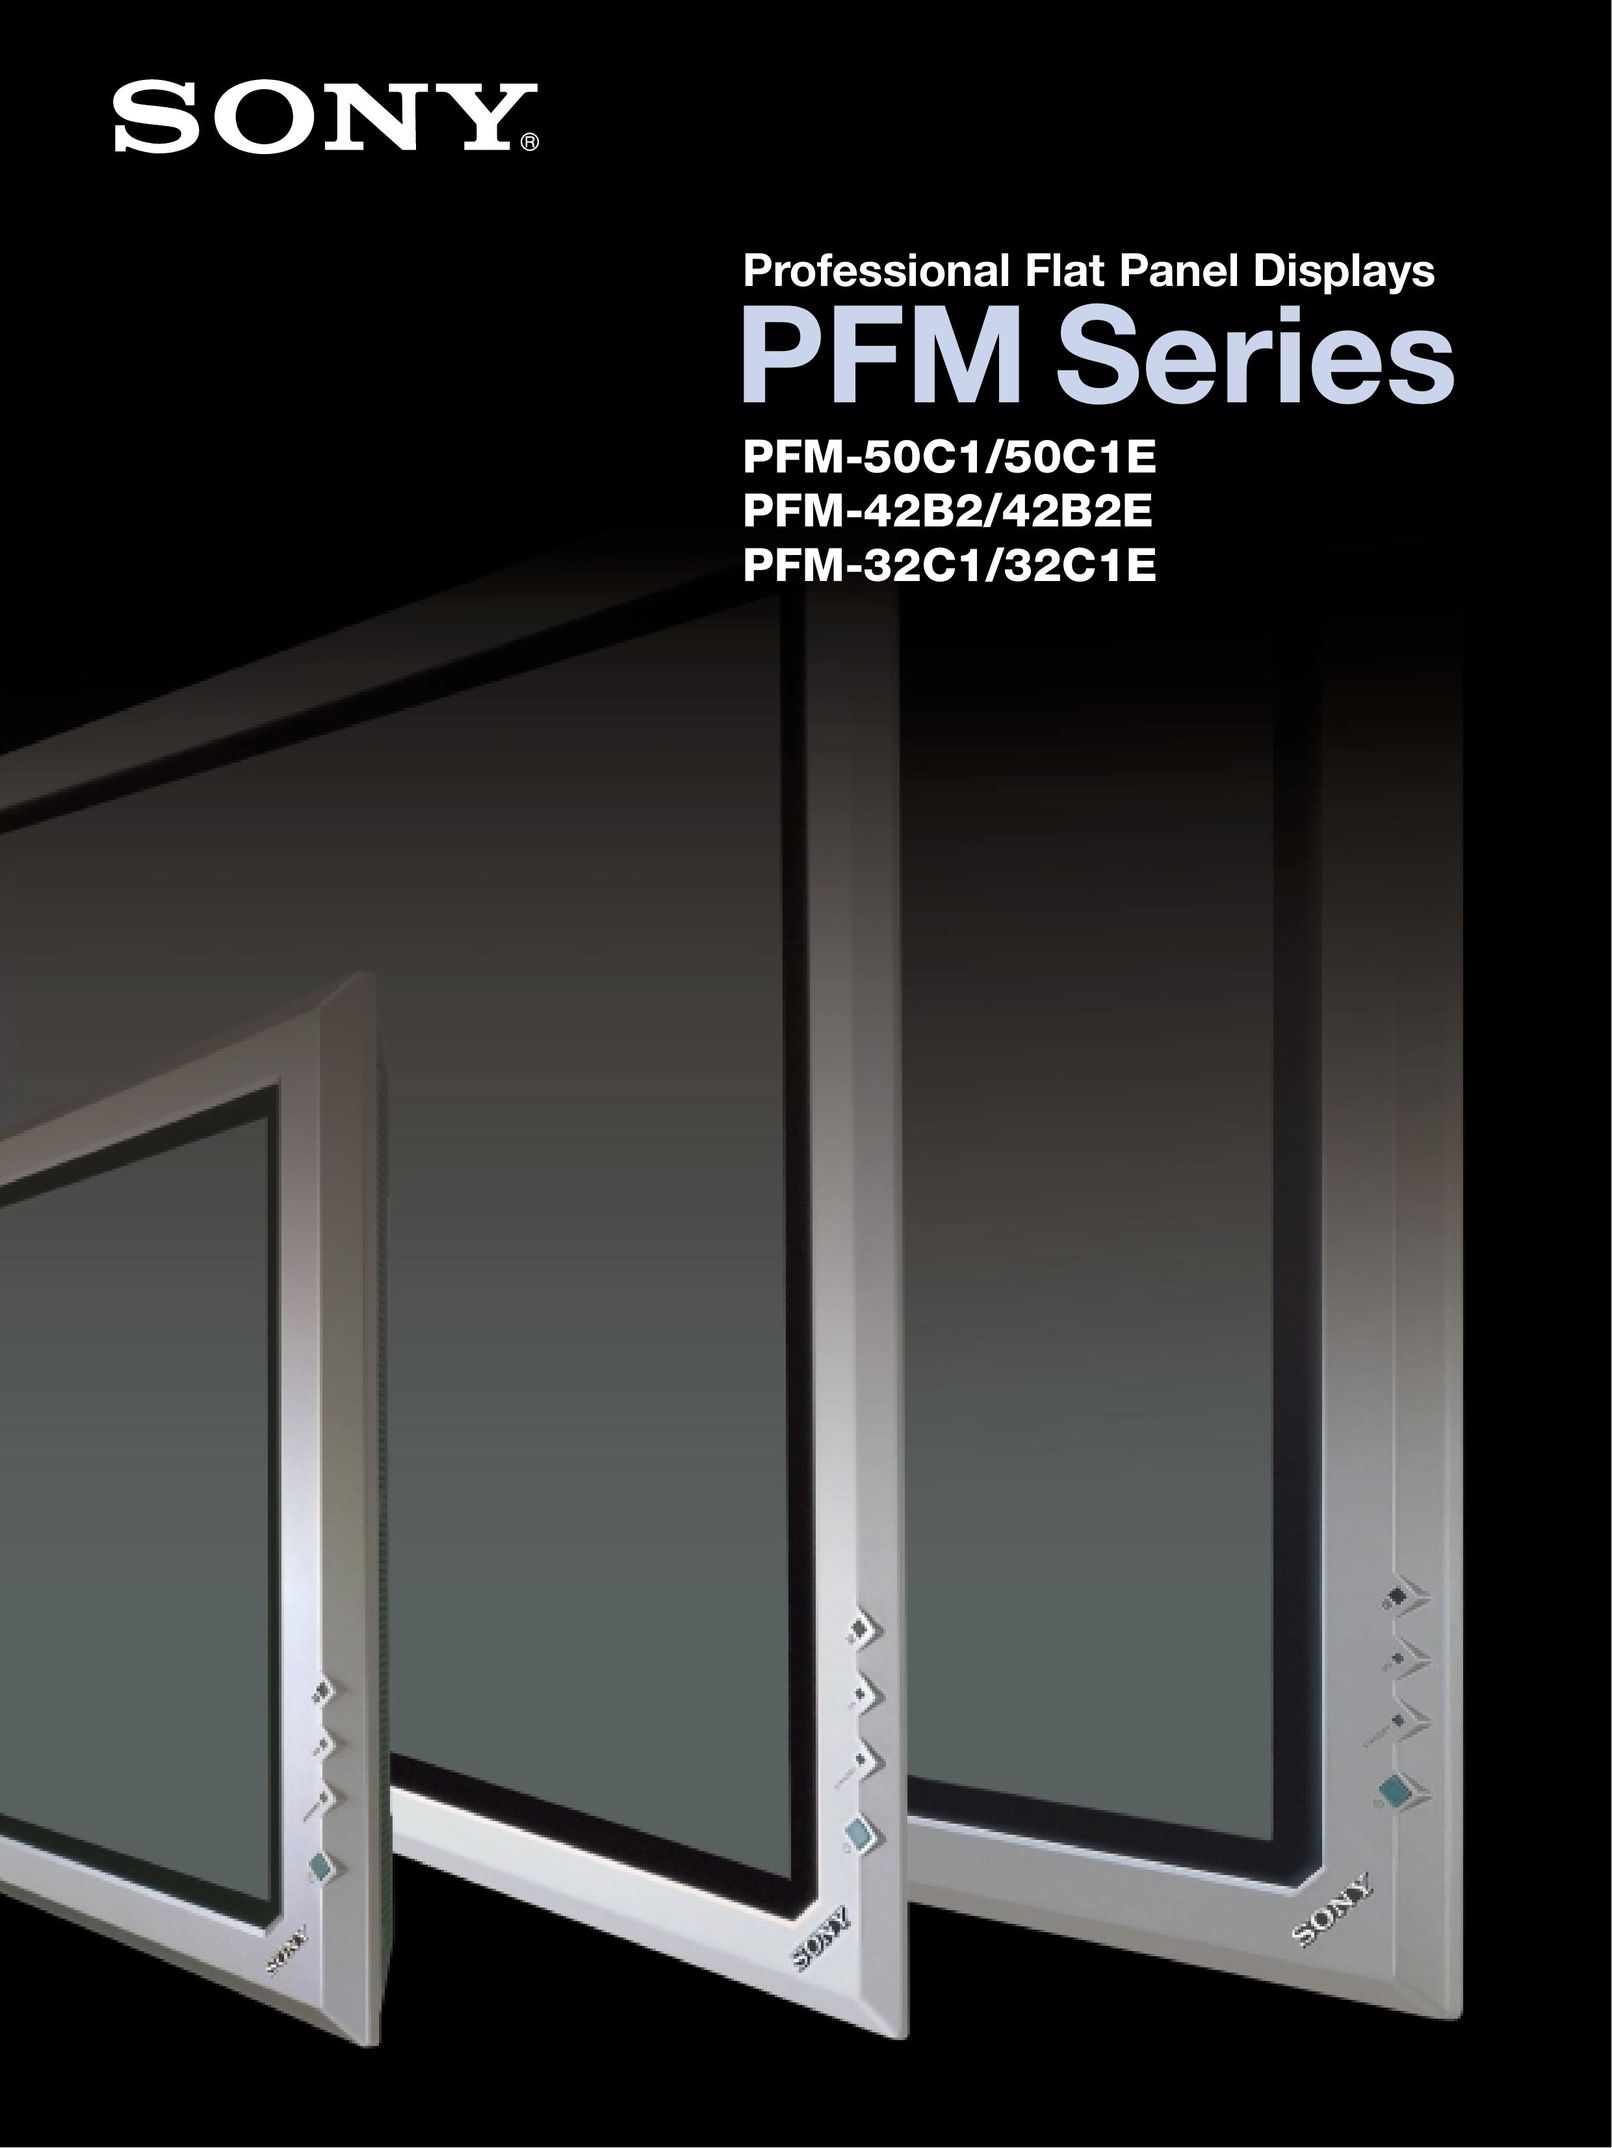 Matrox Electronic Systems PFM-32C1/32C1E Flat Panel Television User Manual